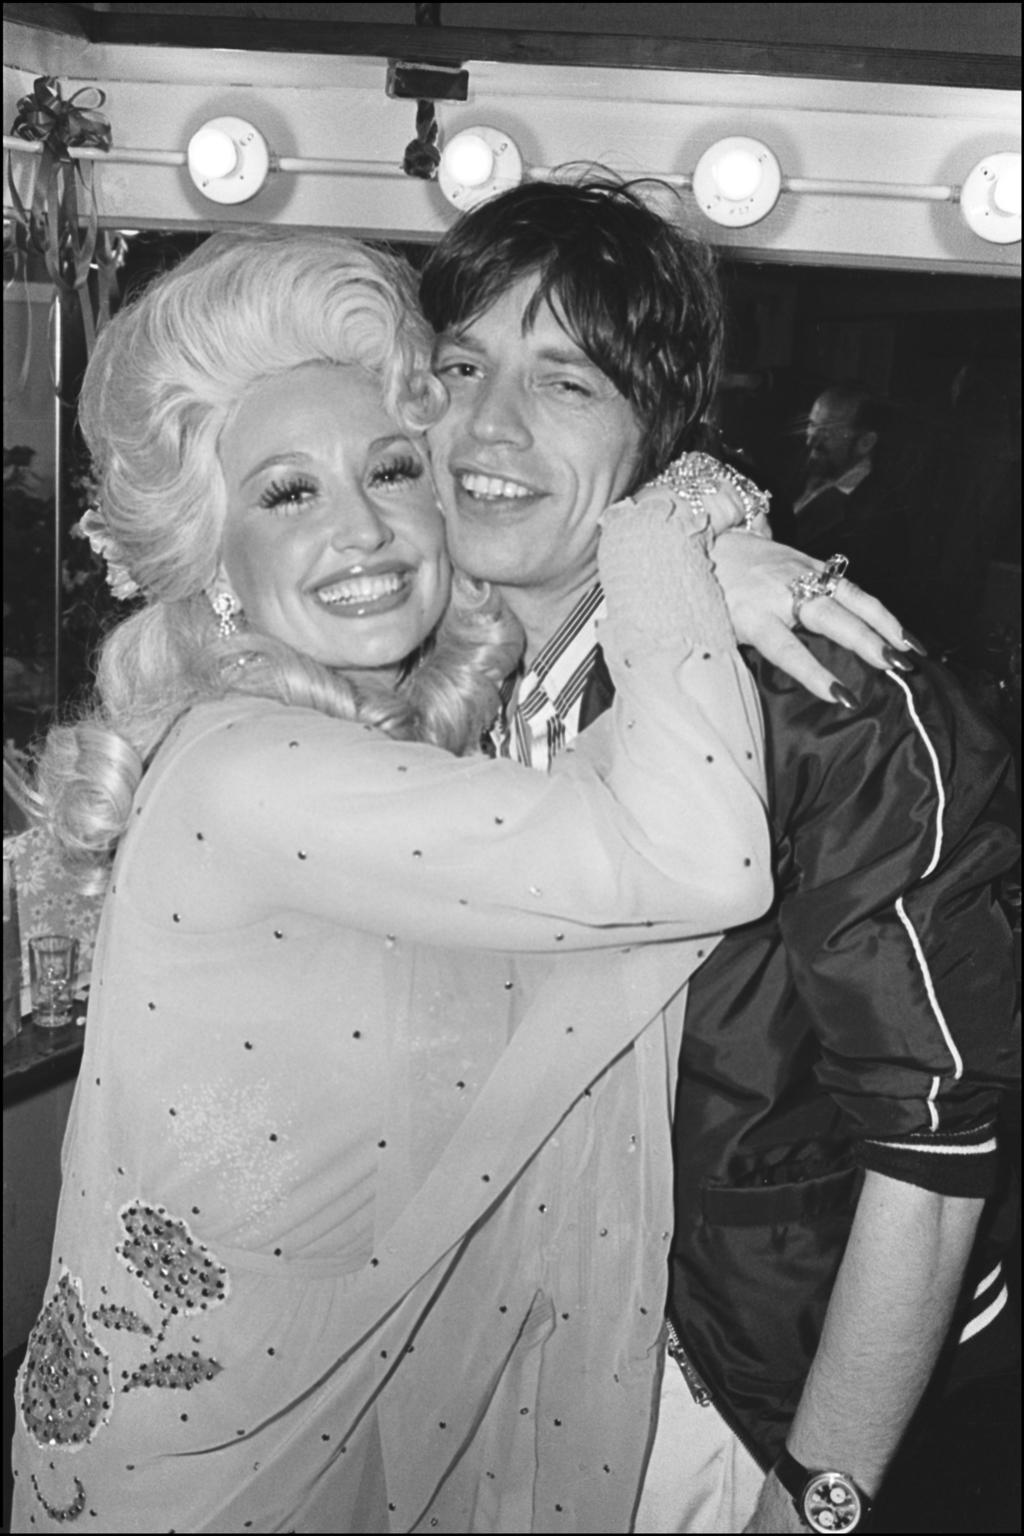 Allan Tannenbaum Portrait Photograph - Dolly Parton and Mick Jagger hugging